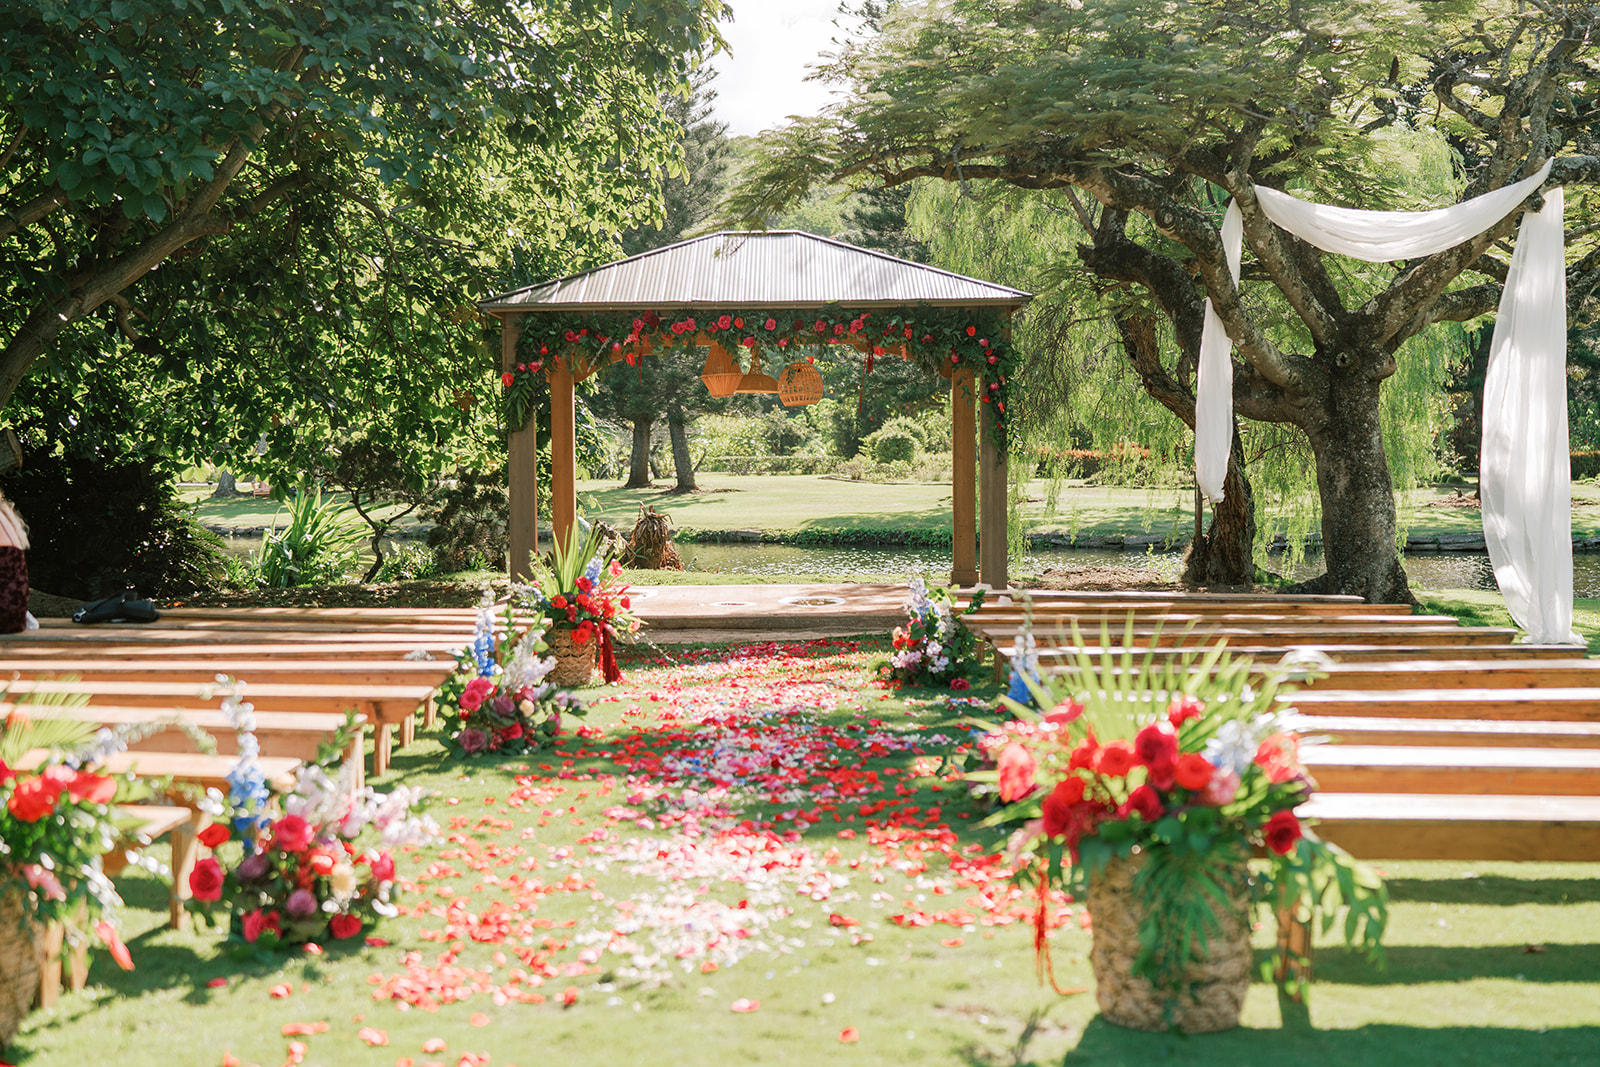 Outdoor Hawaiian wedding setup with a floral-decorated gazebo and petal-strewn aisle in a garden setting in Kauai